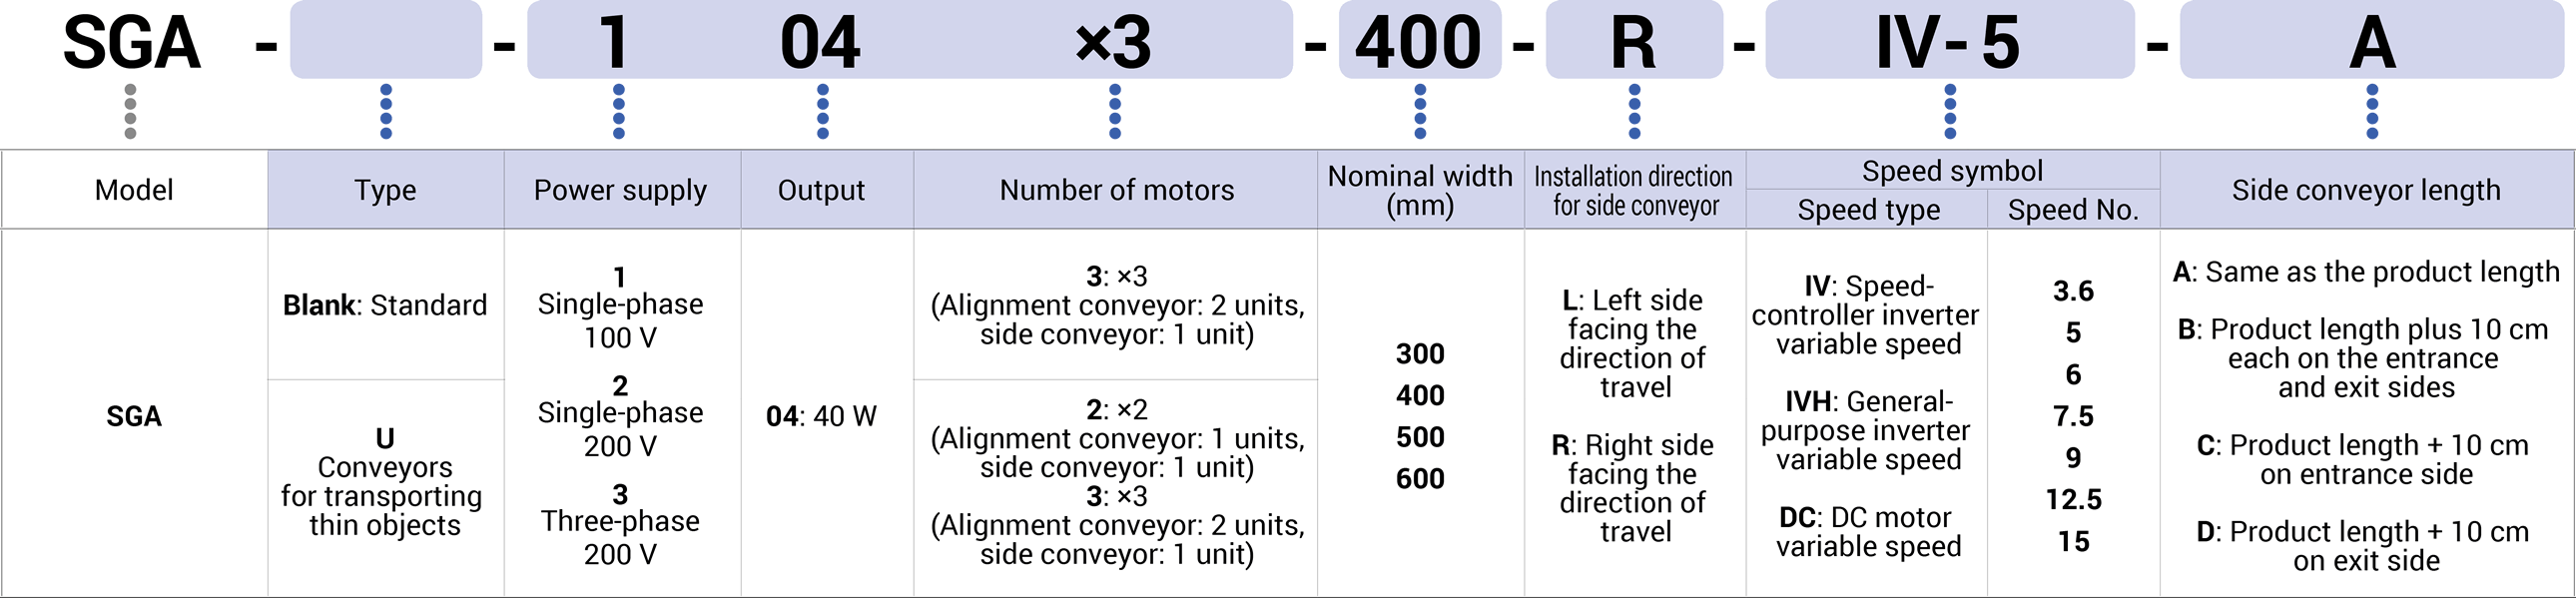 Key to model number designations